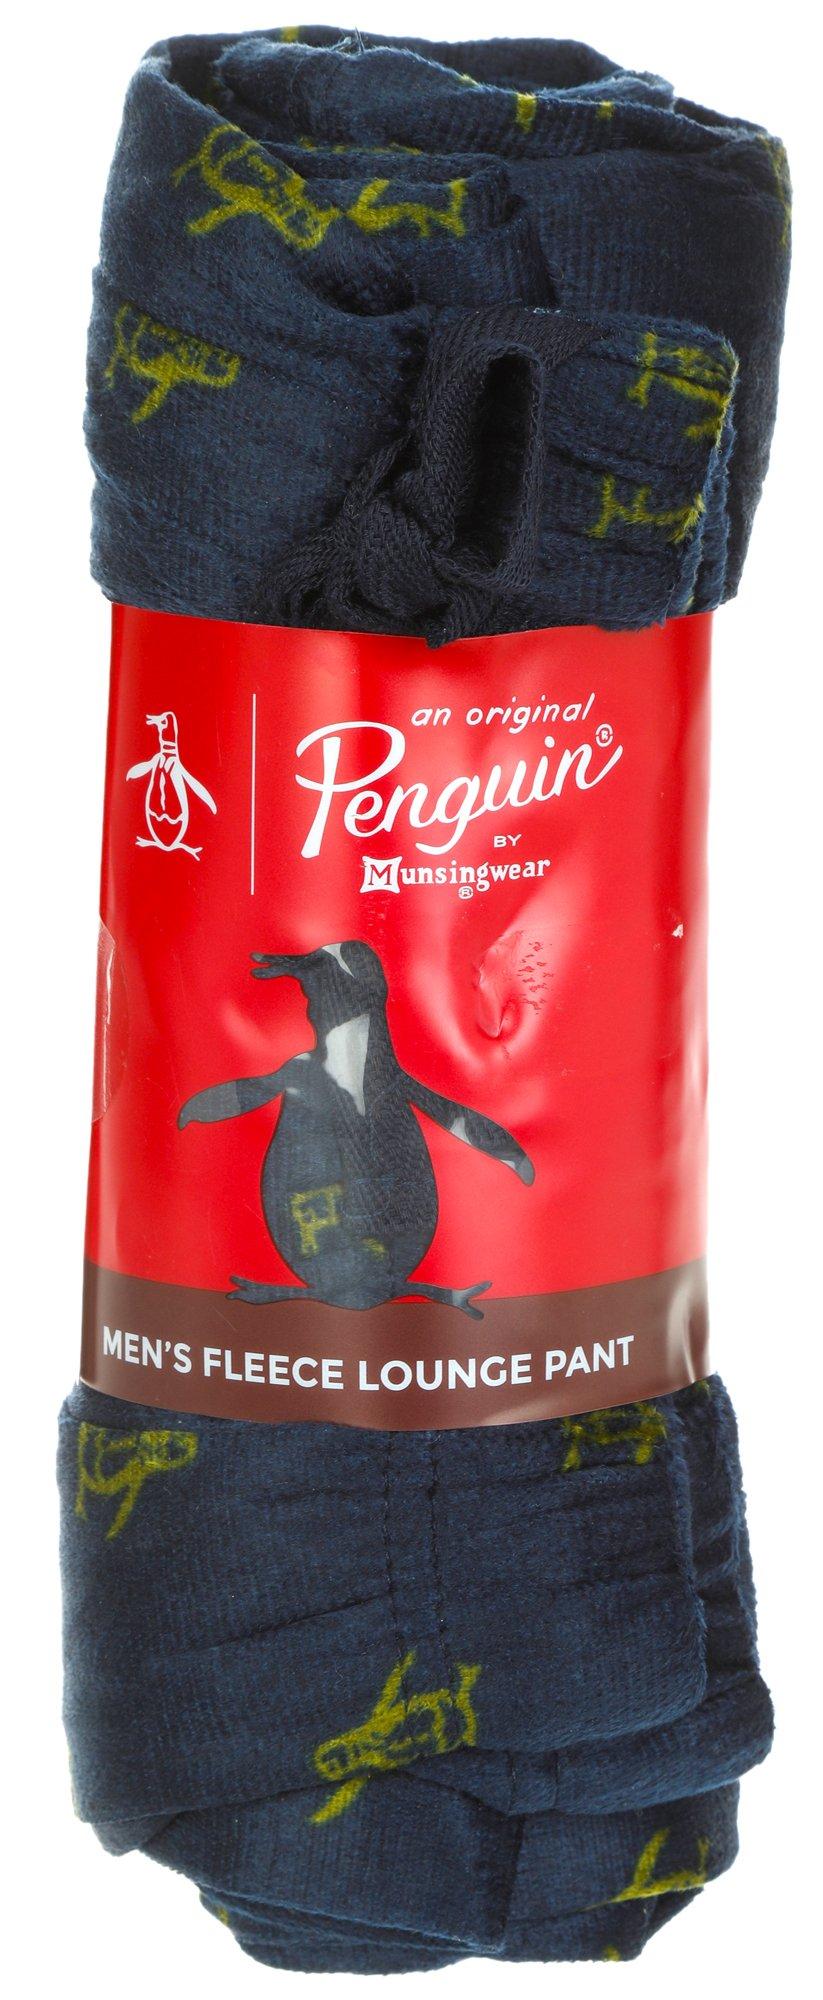 Men's Fleece Lounge Pant